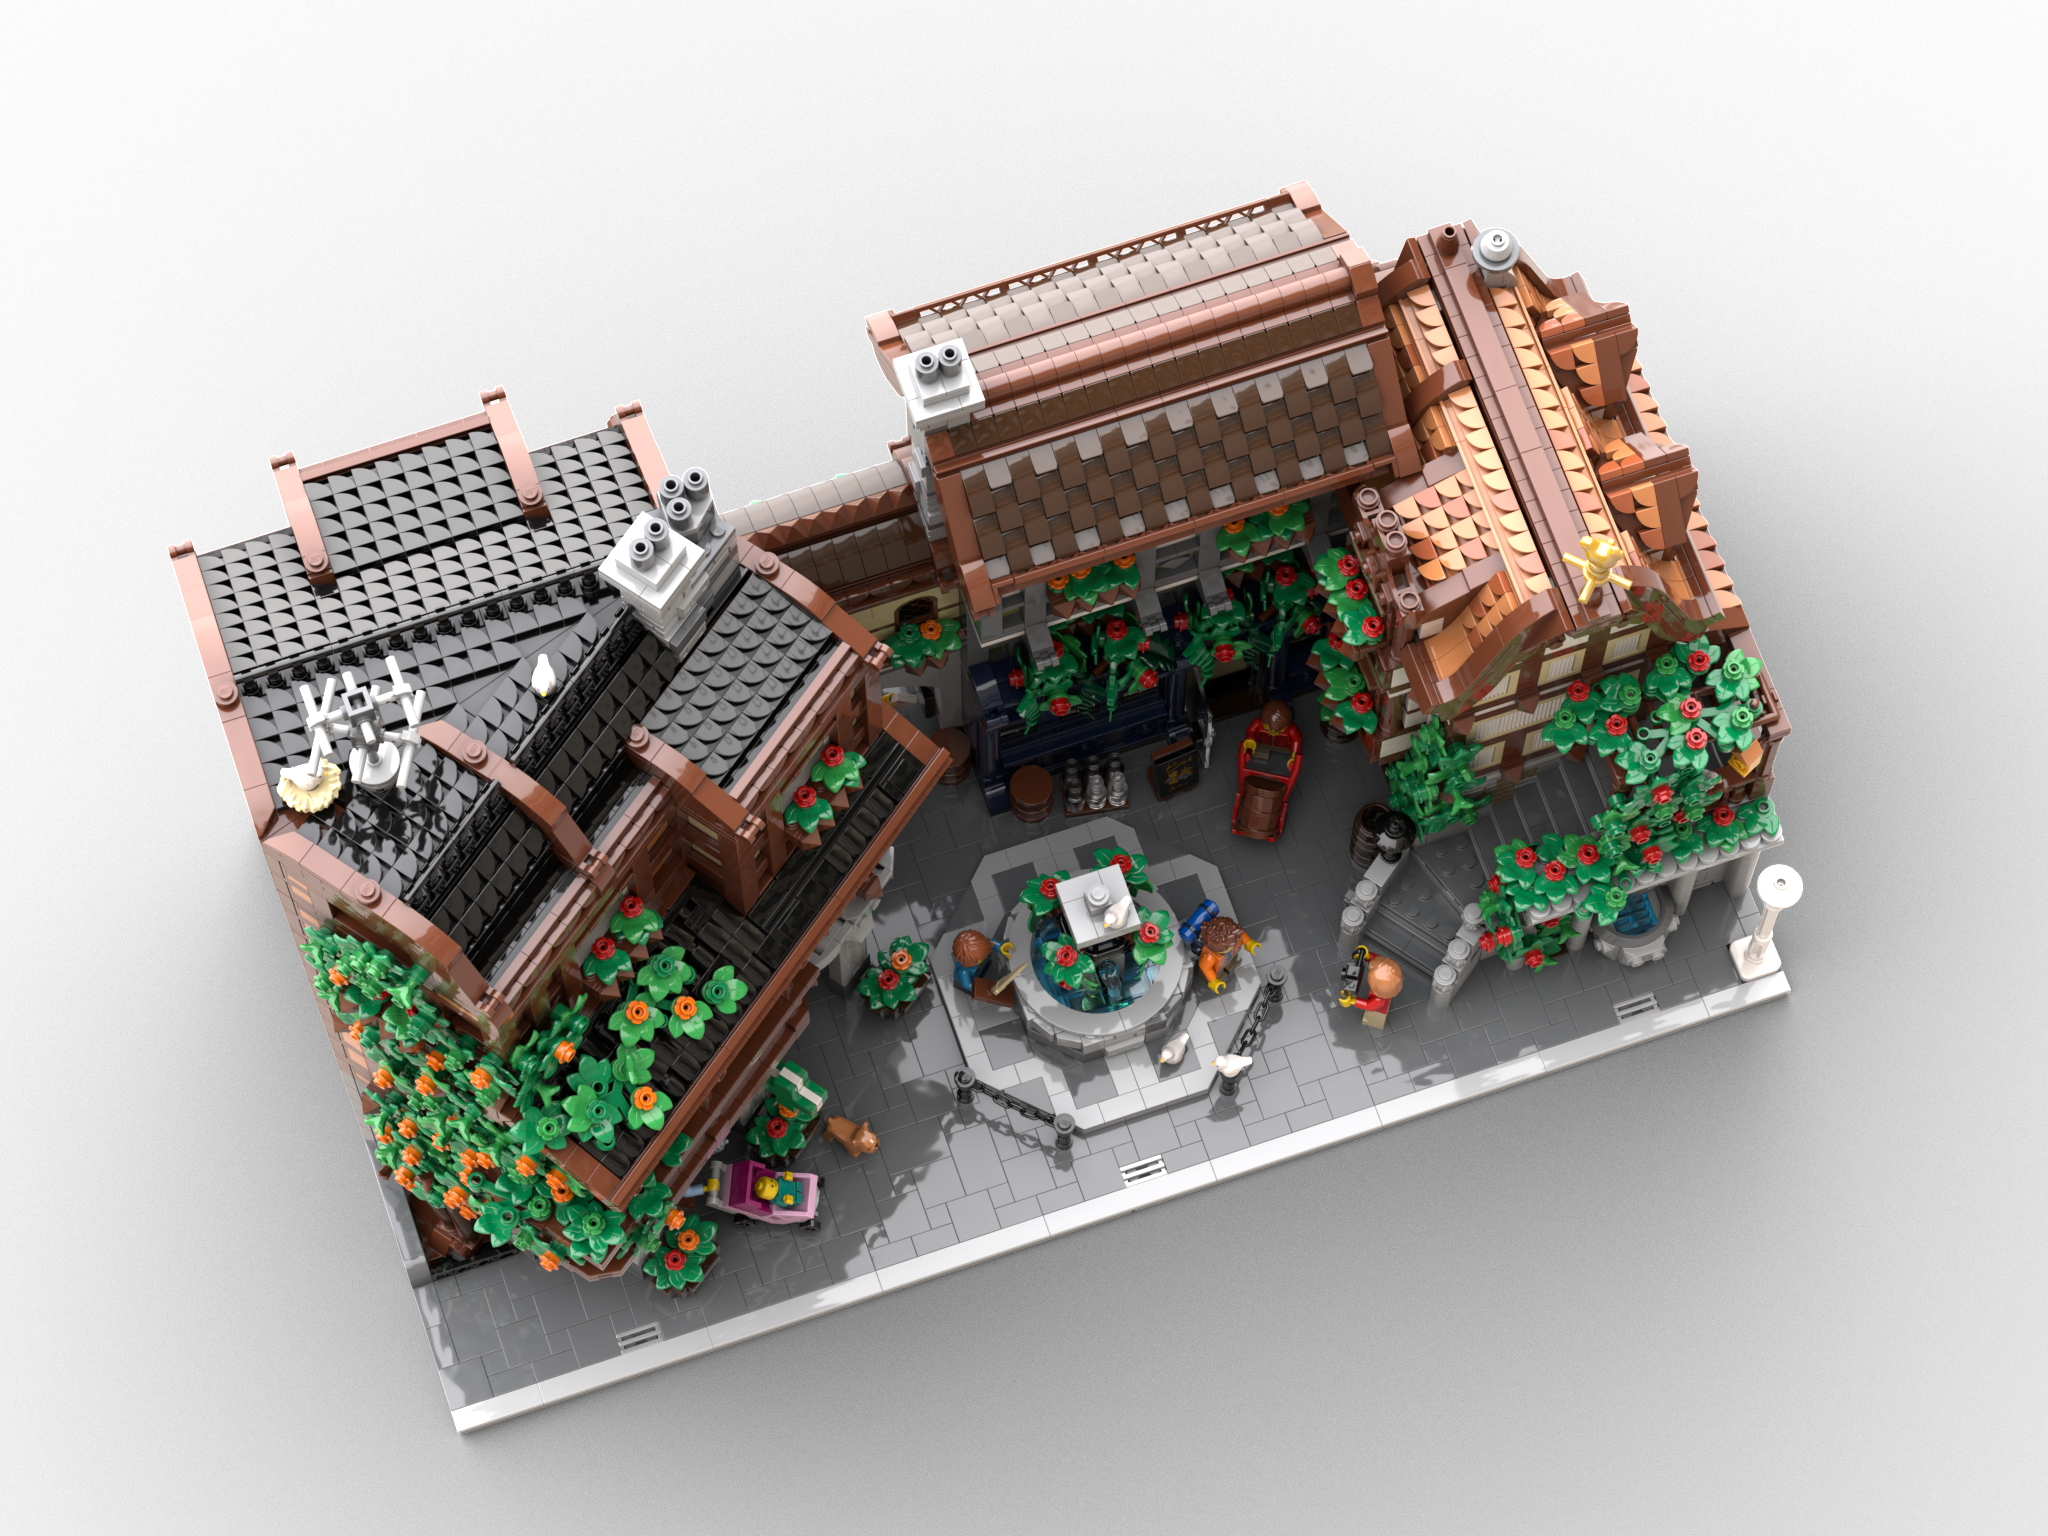 Medieval town] [BrickLink]